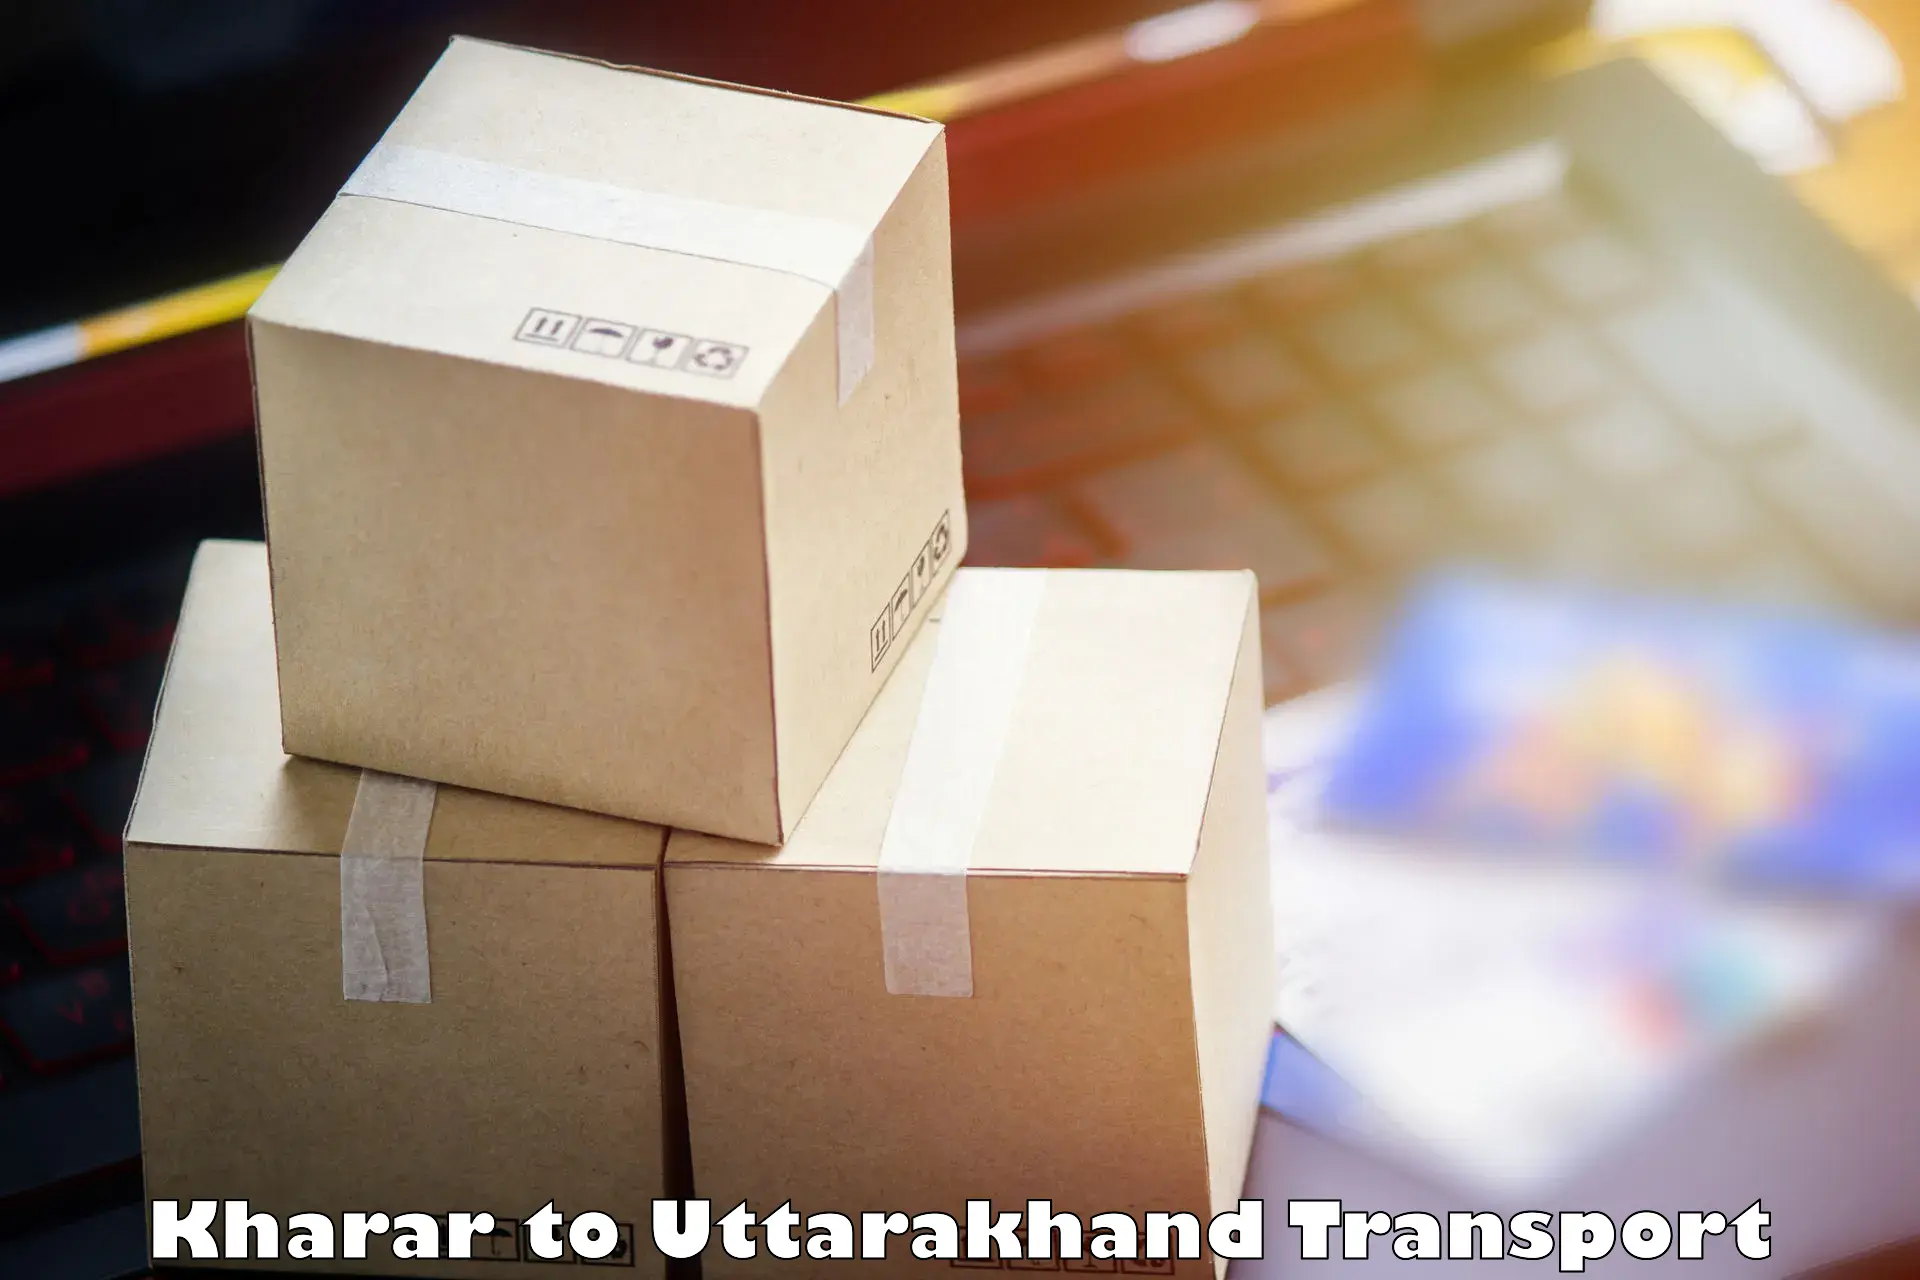 Truck transport companies in India Kharar to Bhagwanpur